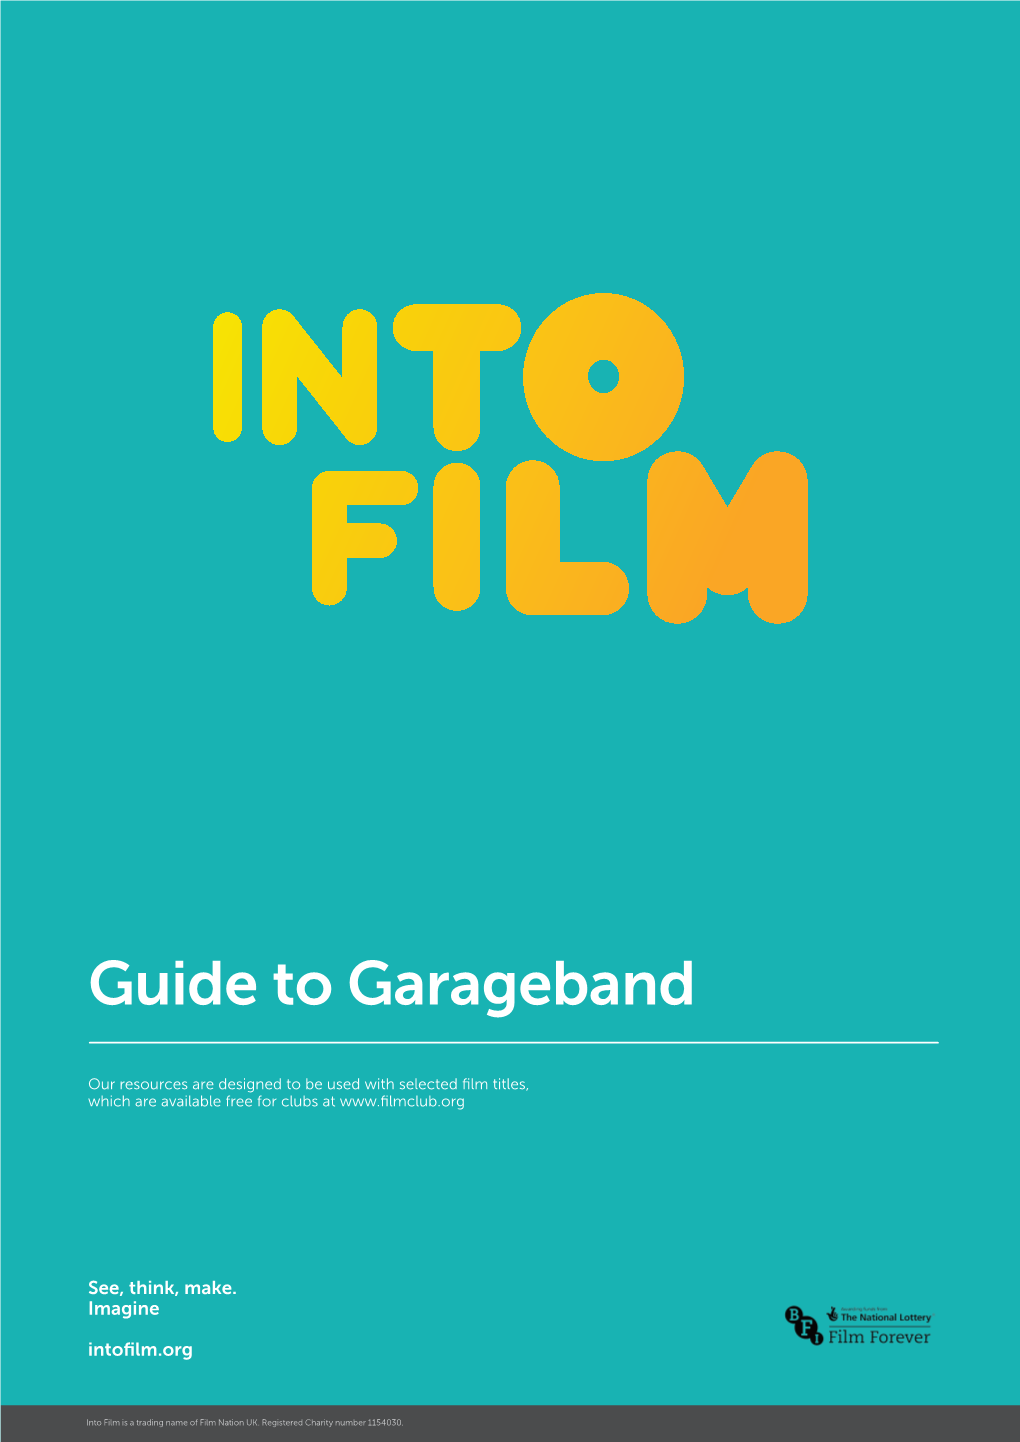 Guide to Garageband